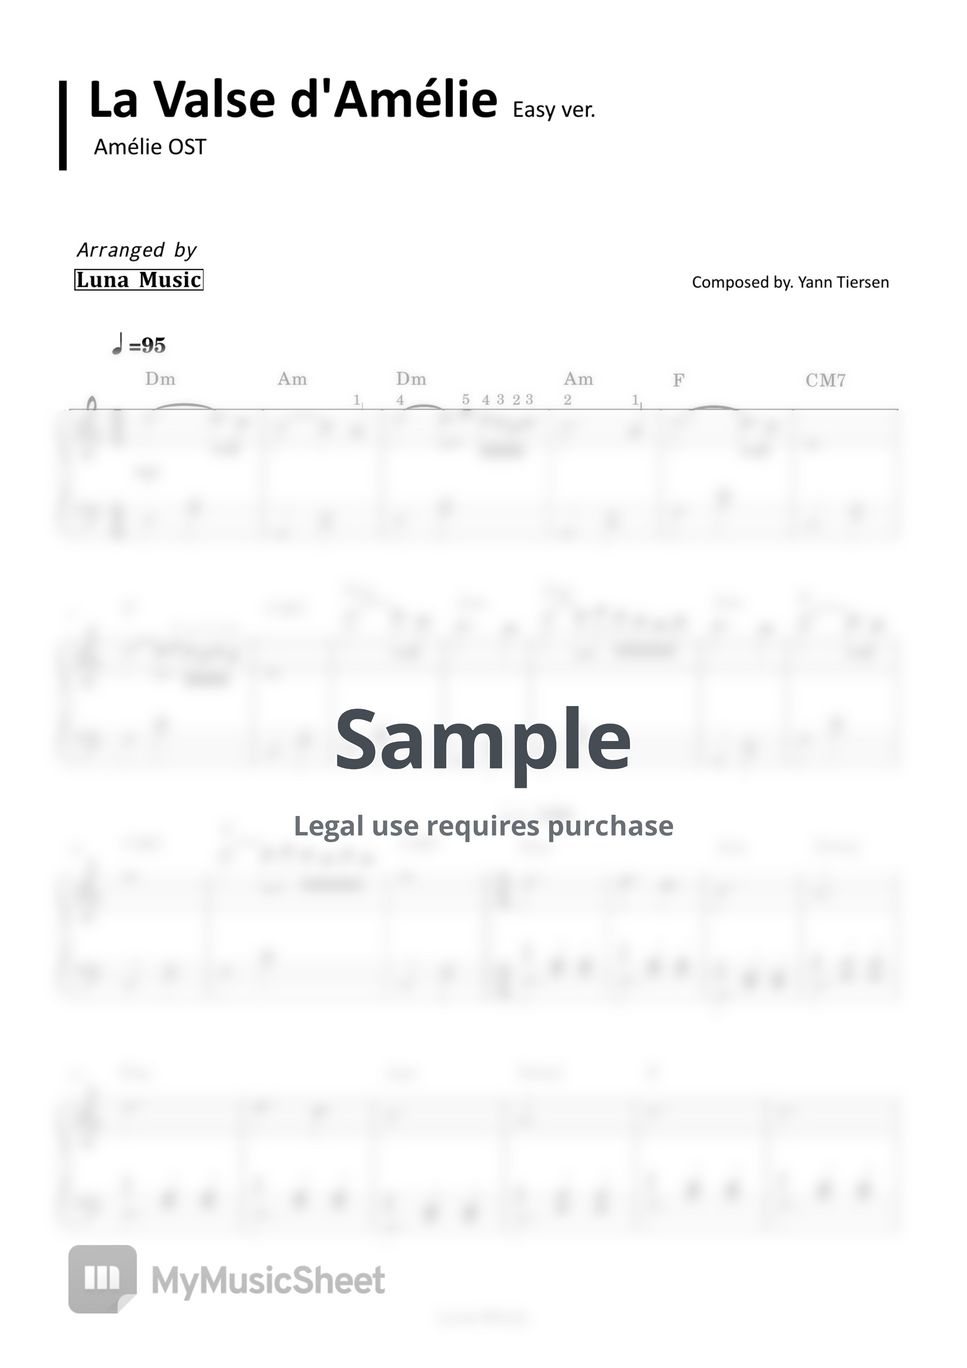 Amélie OST - La Valse d'Amélie (Easy Piano Sheet) by 𝐋𝐮𝐧𝐚 𝐌𝐮𝐬𝐢𝐜 𝐄𝐚𝐬𝐲